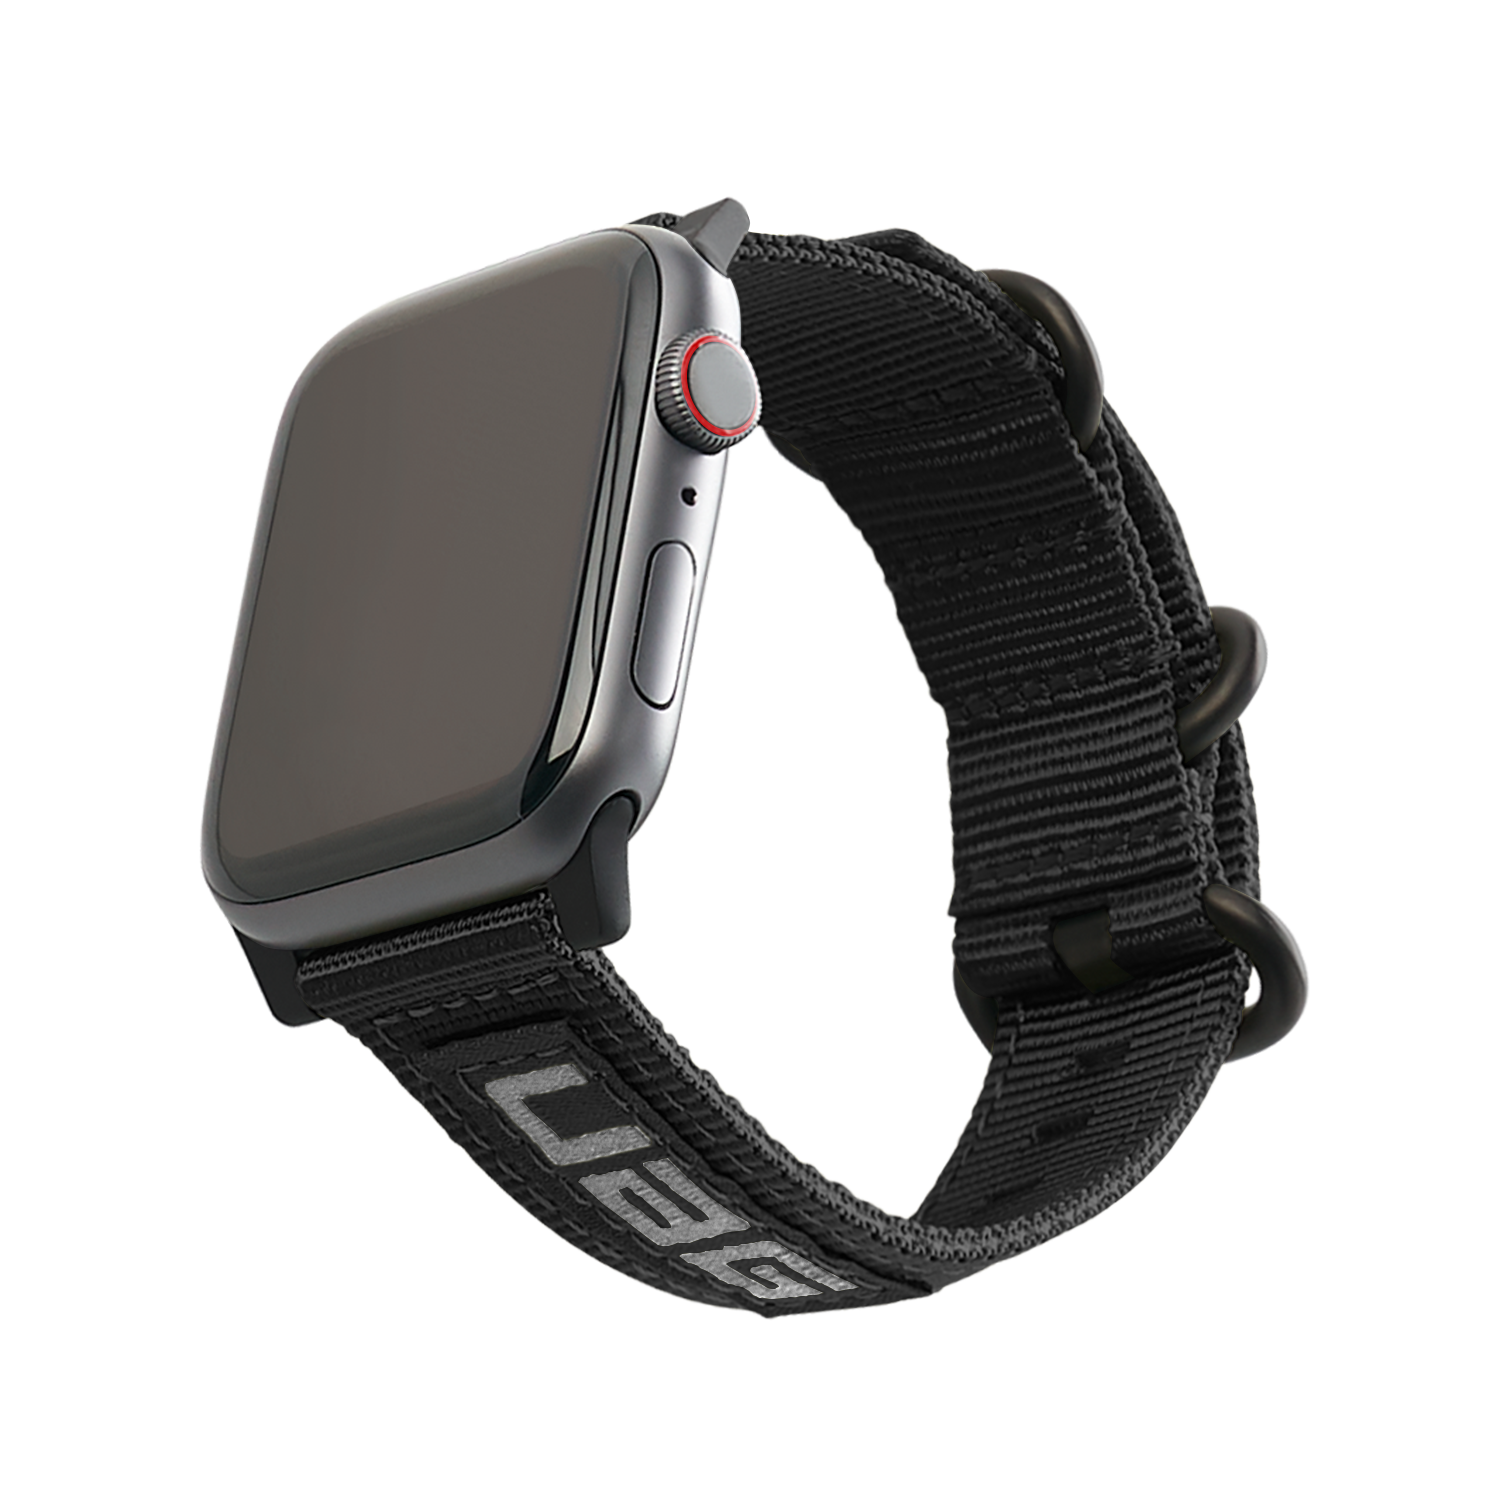 Nato Eco Strap Apple Watch 44mm, Black